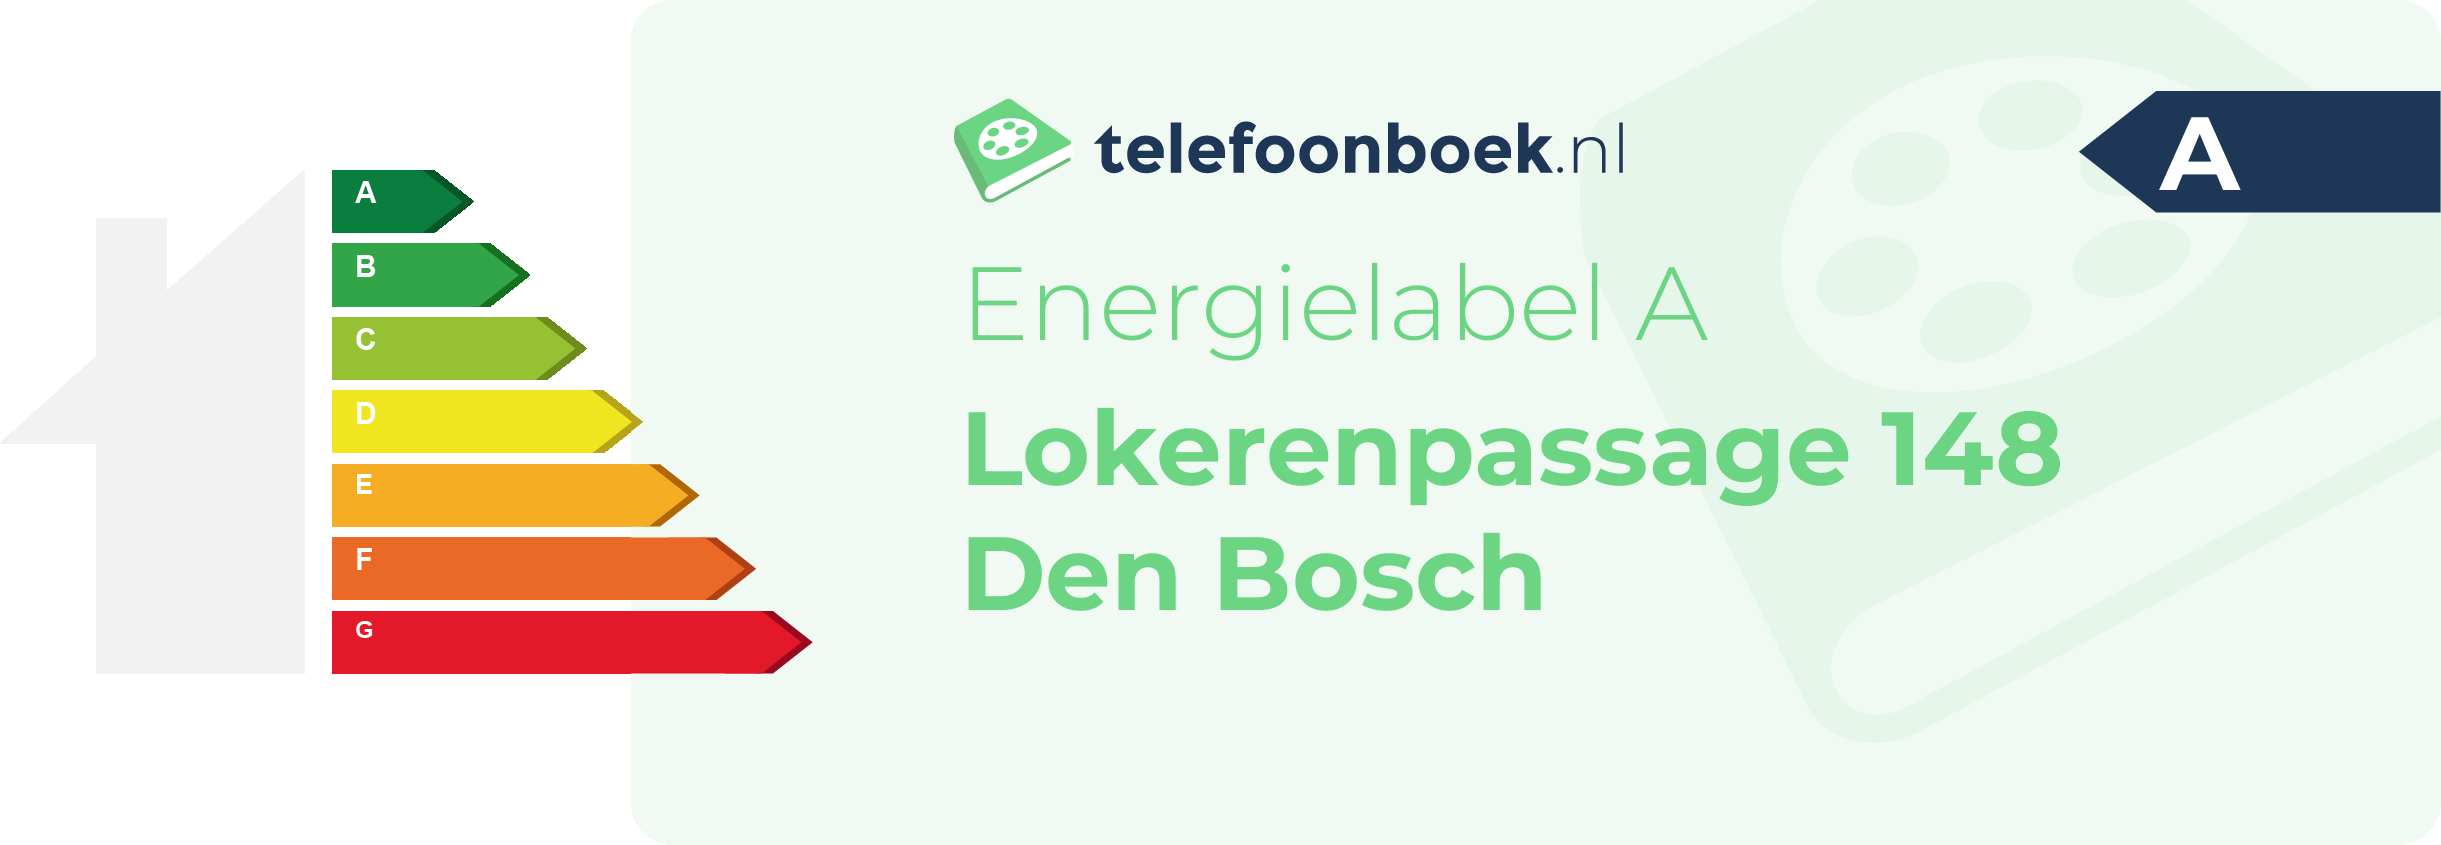 Energielabel Lokerenpassage 148 Den Bosch